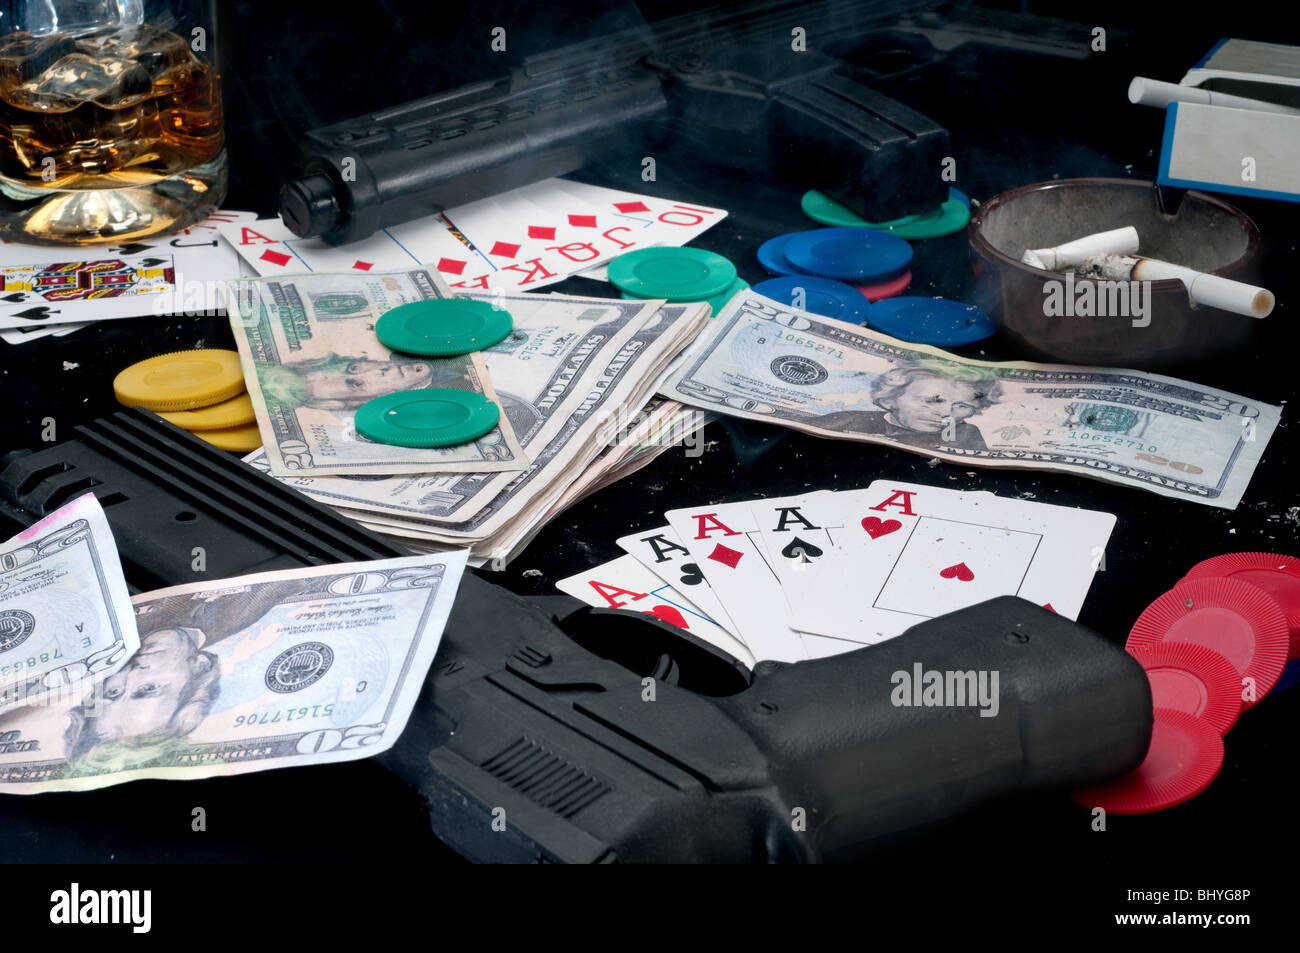 Guns and cards on a table - cheating at gambling Stock Photo